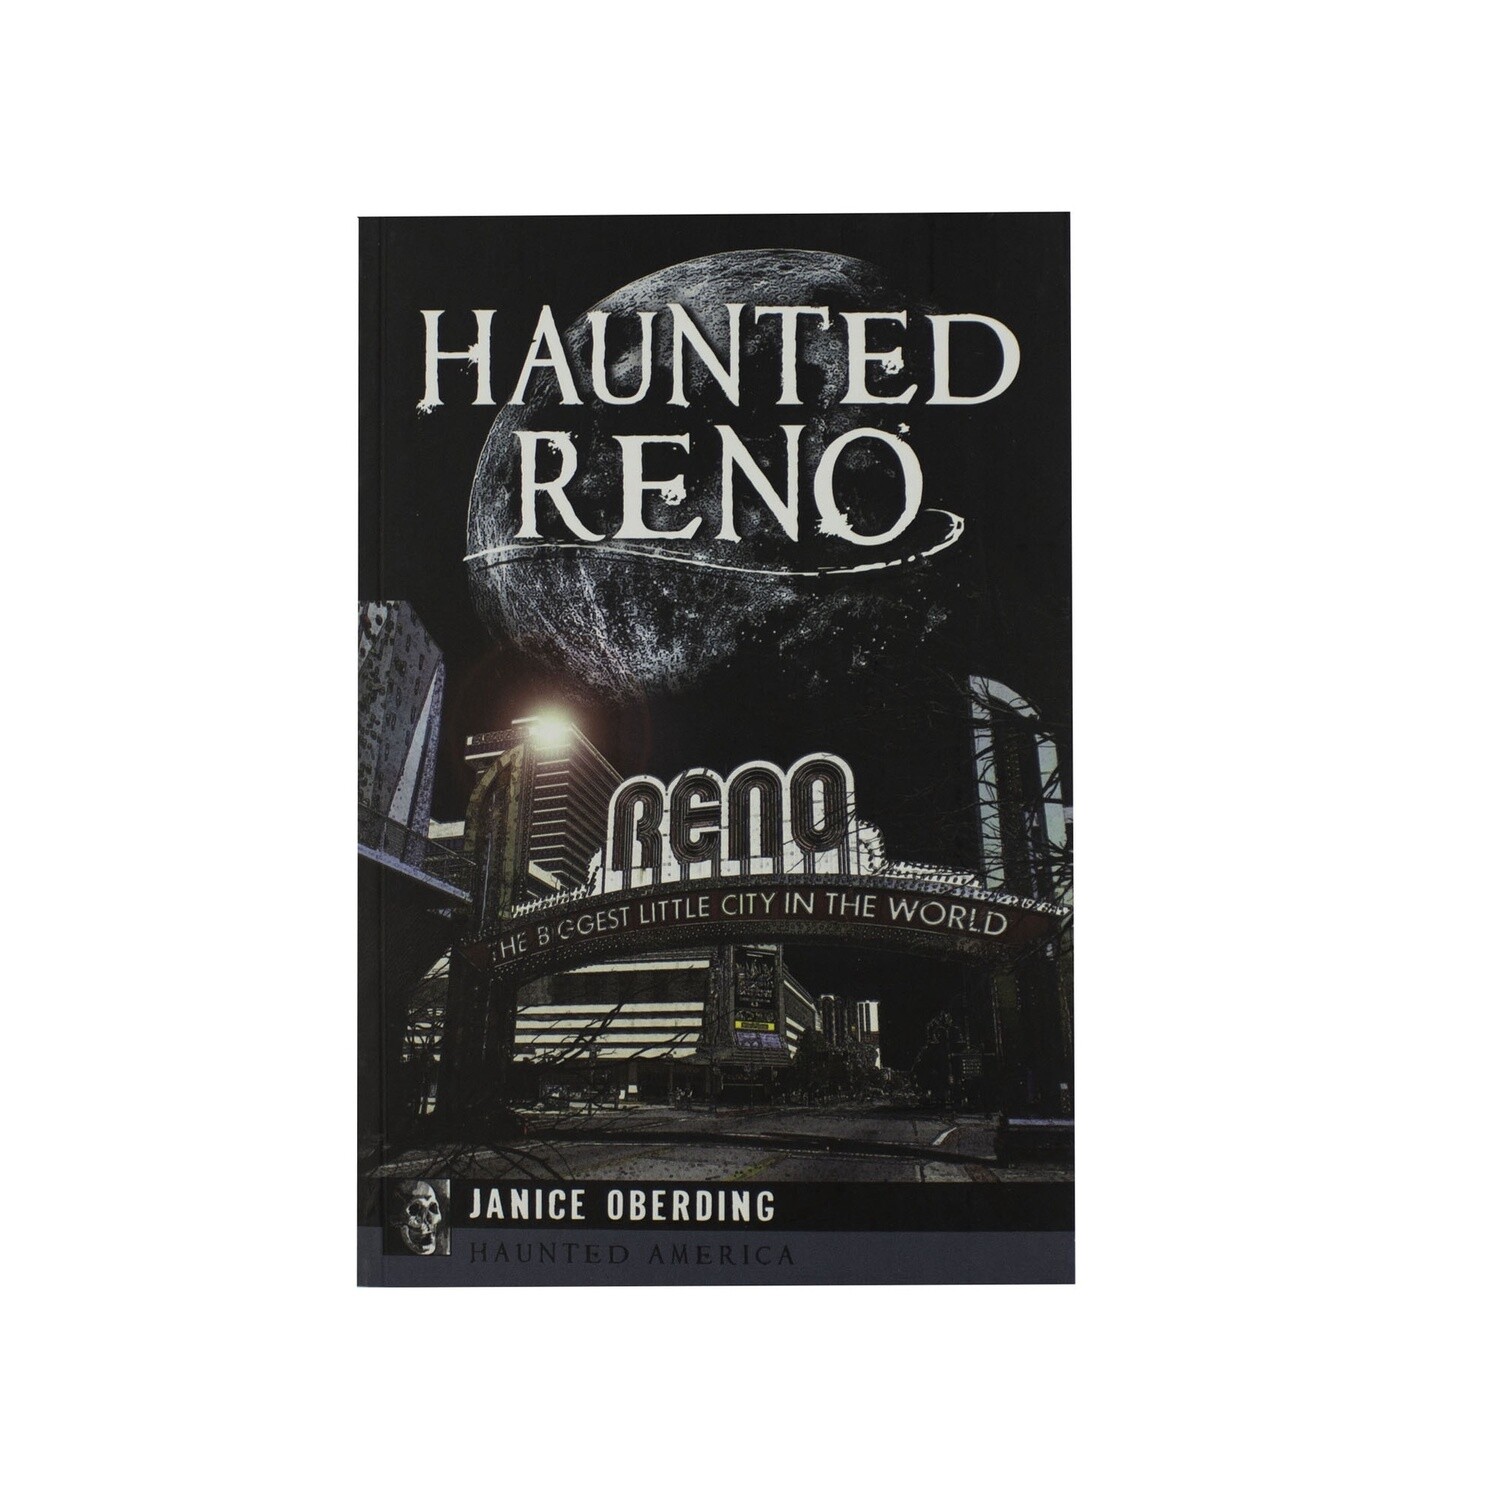 Haunted Reno by Janice Oberding